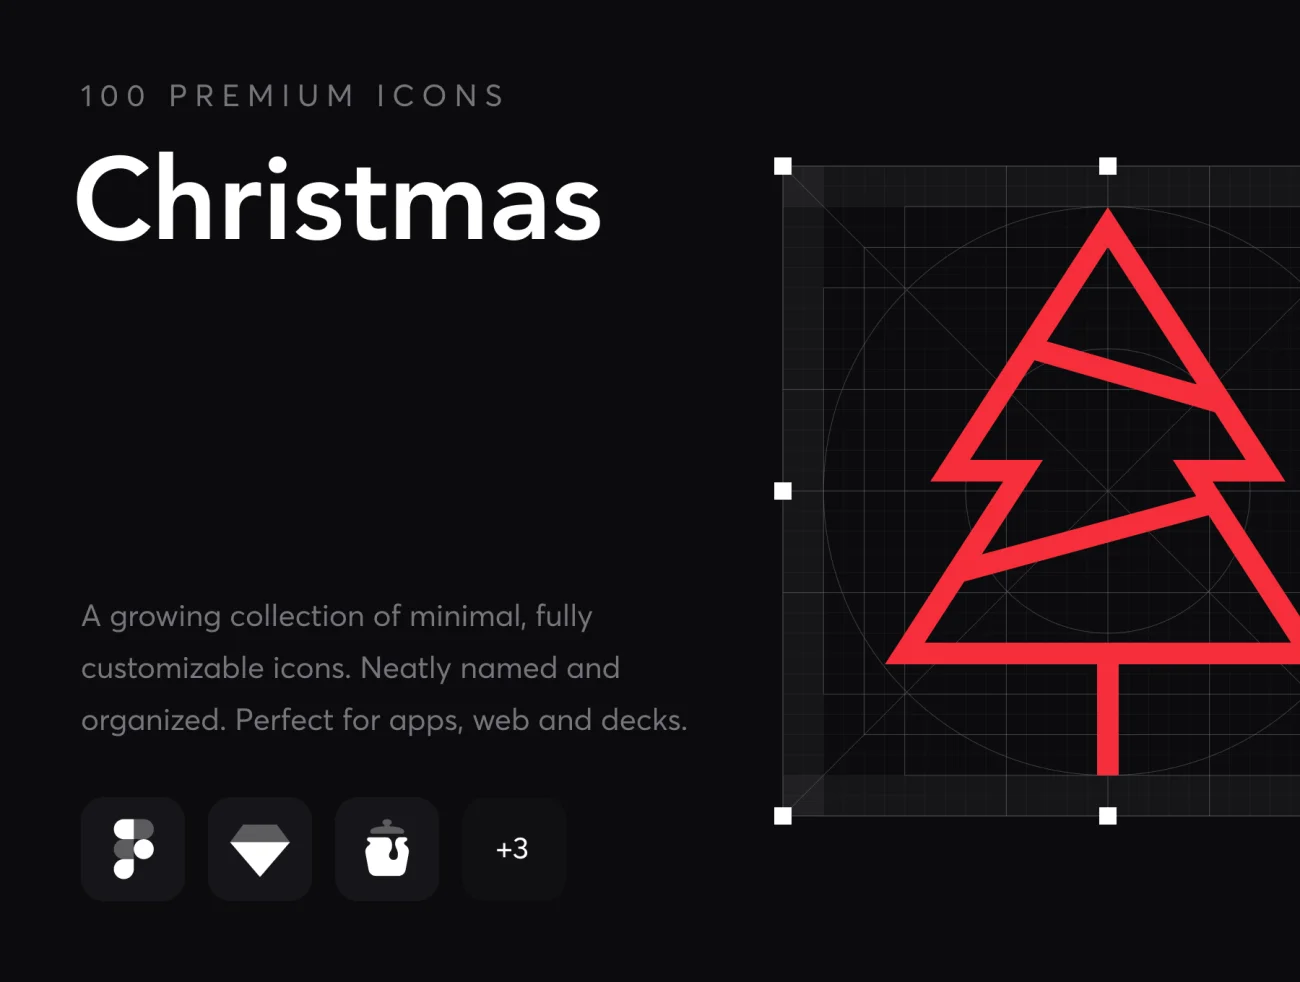 100款圣诞图标素材下载 Christmas – Premium Icons .sketch .svg .ai .psd .ppt .figma插图1